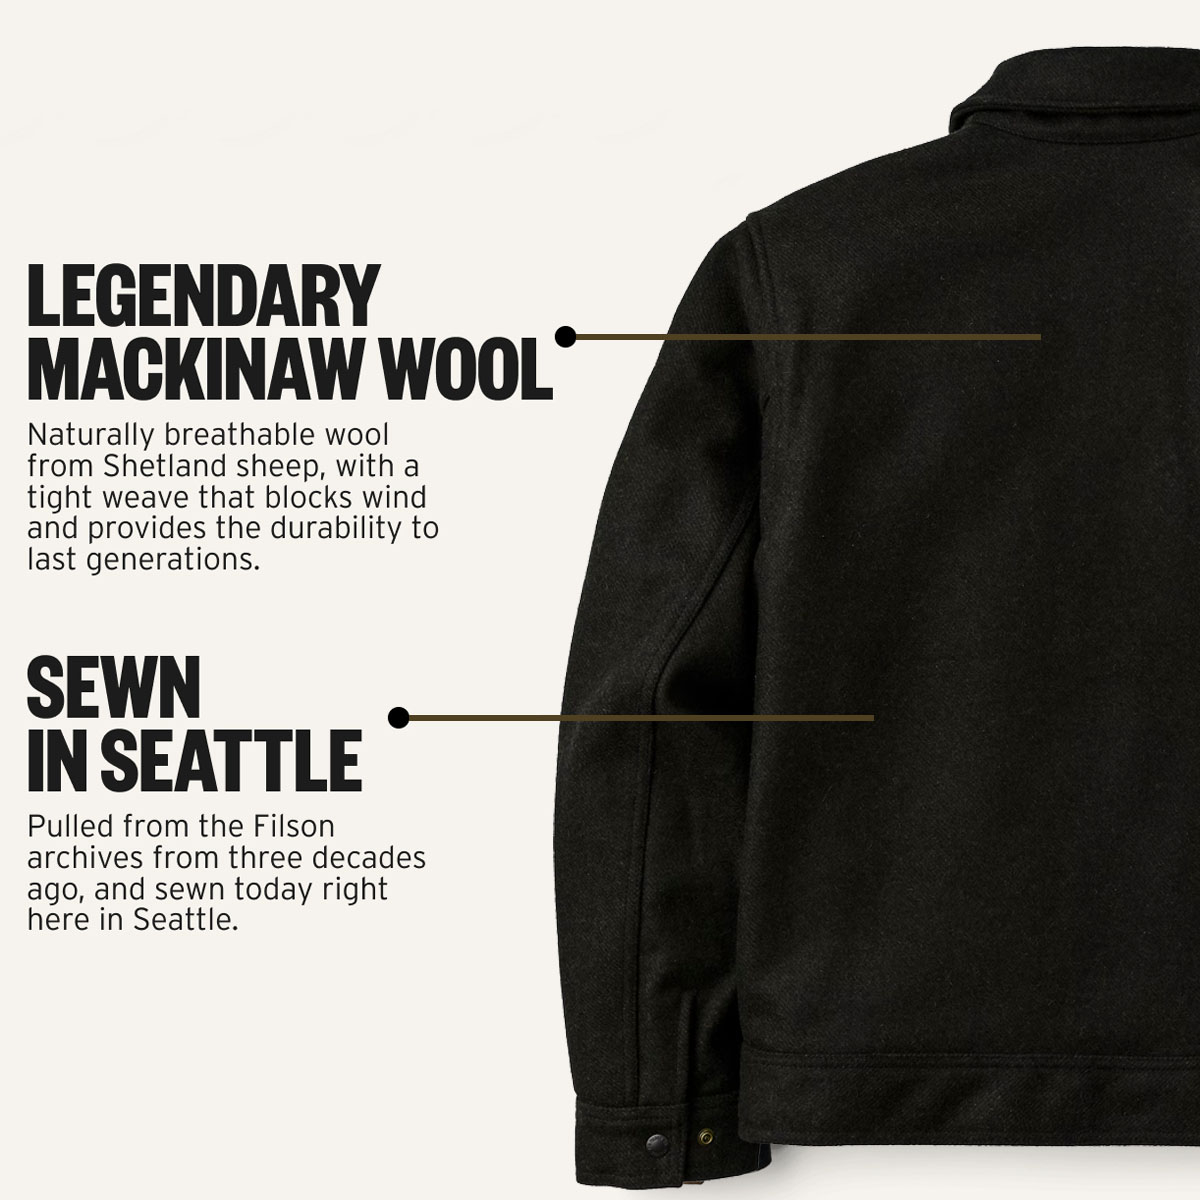 Filson Mackinaw Wool Work Jacket Peak Black, Legendary Mackinaw Wool and Sewn in Seattle